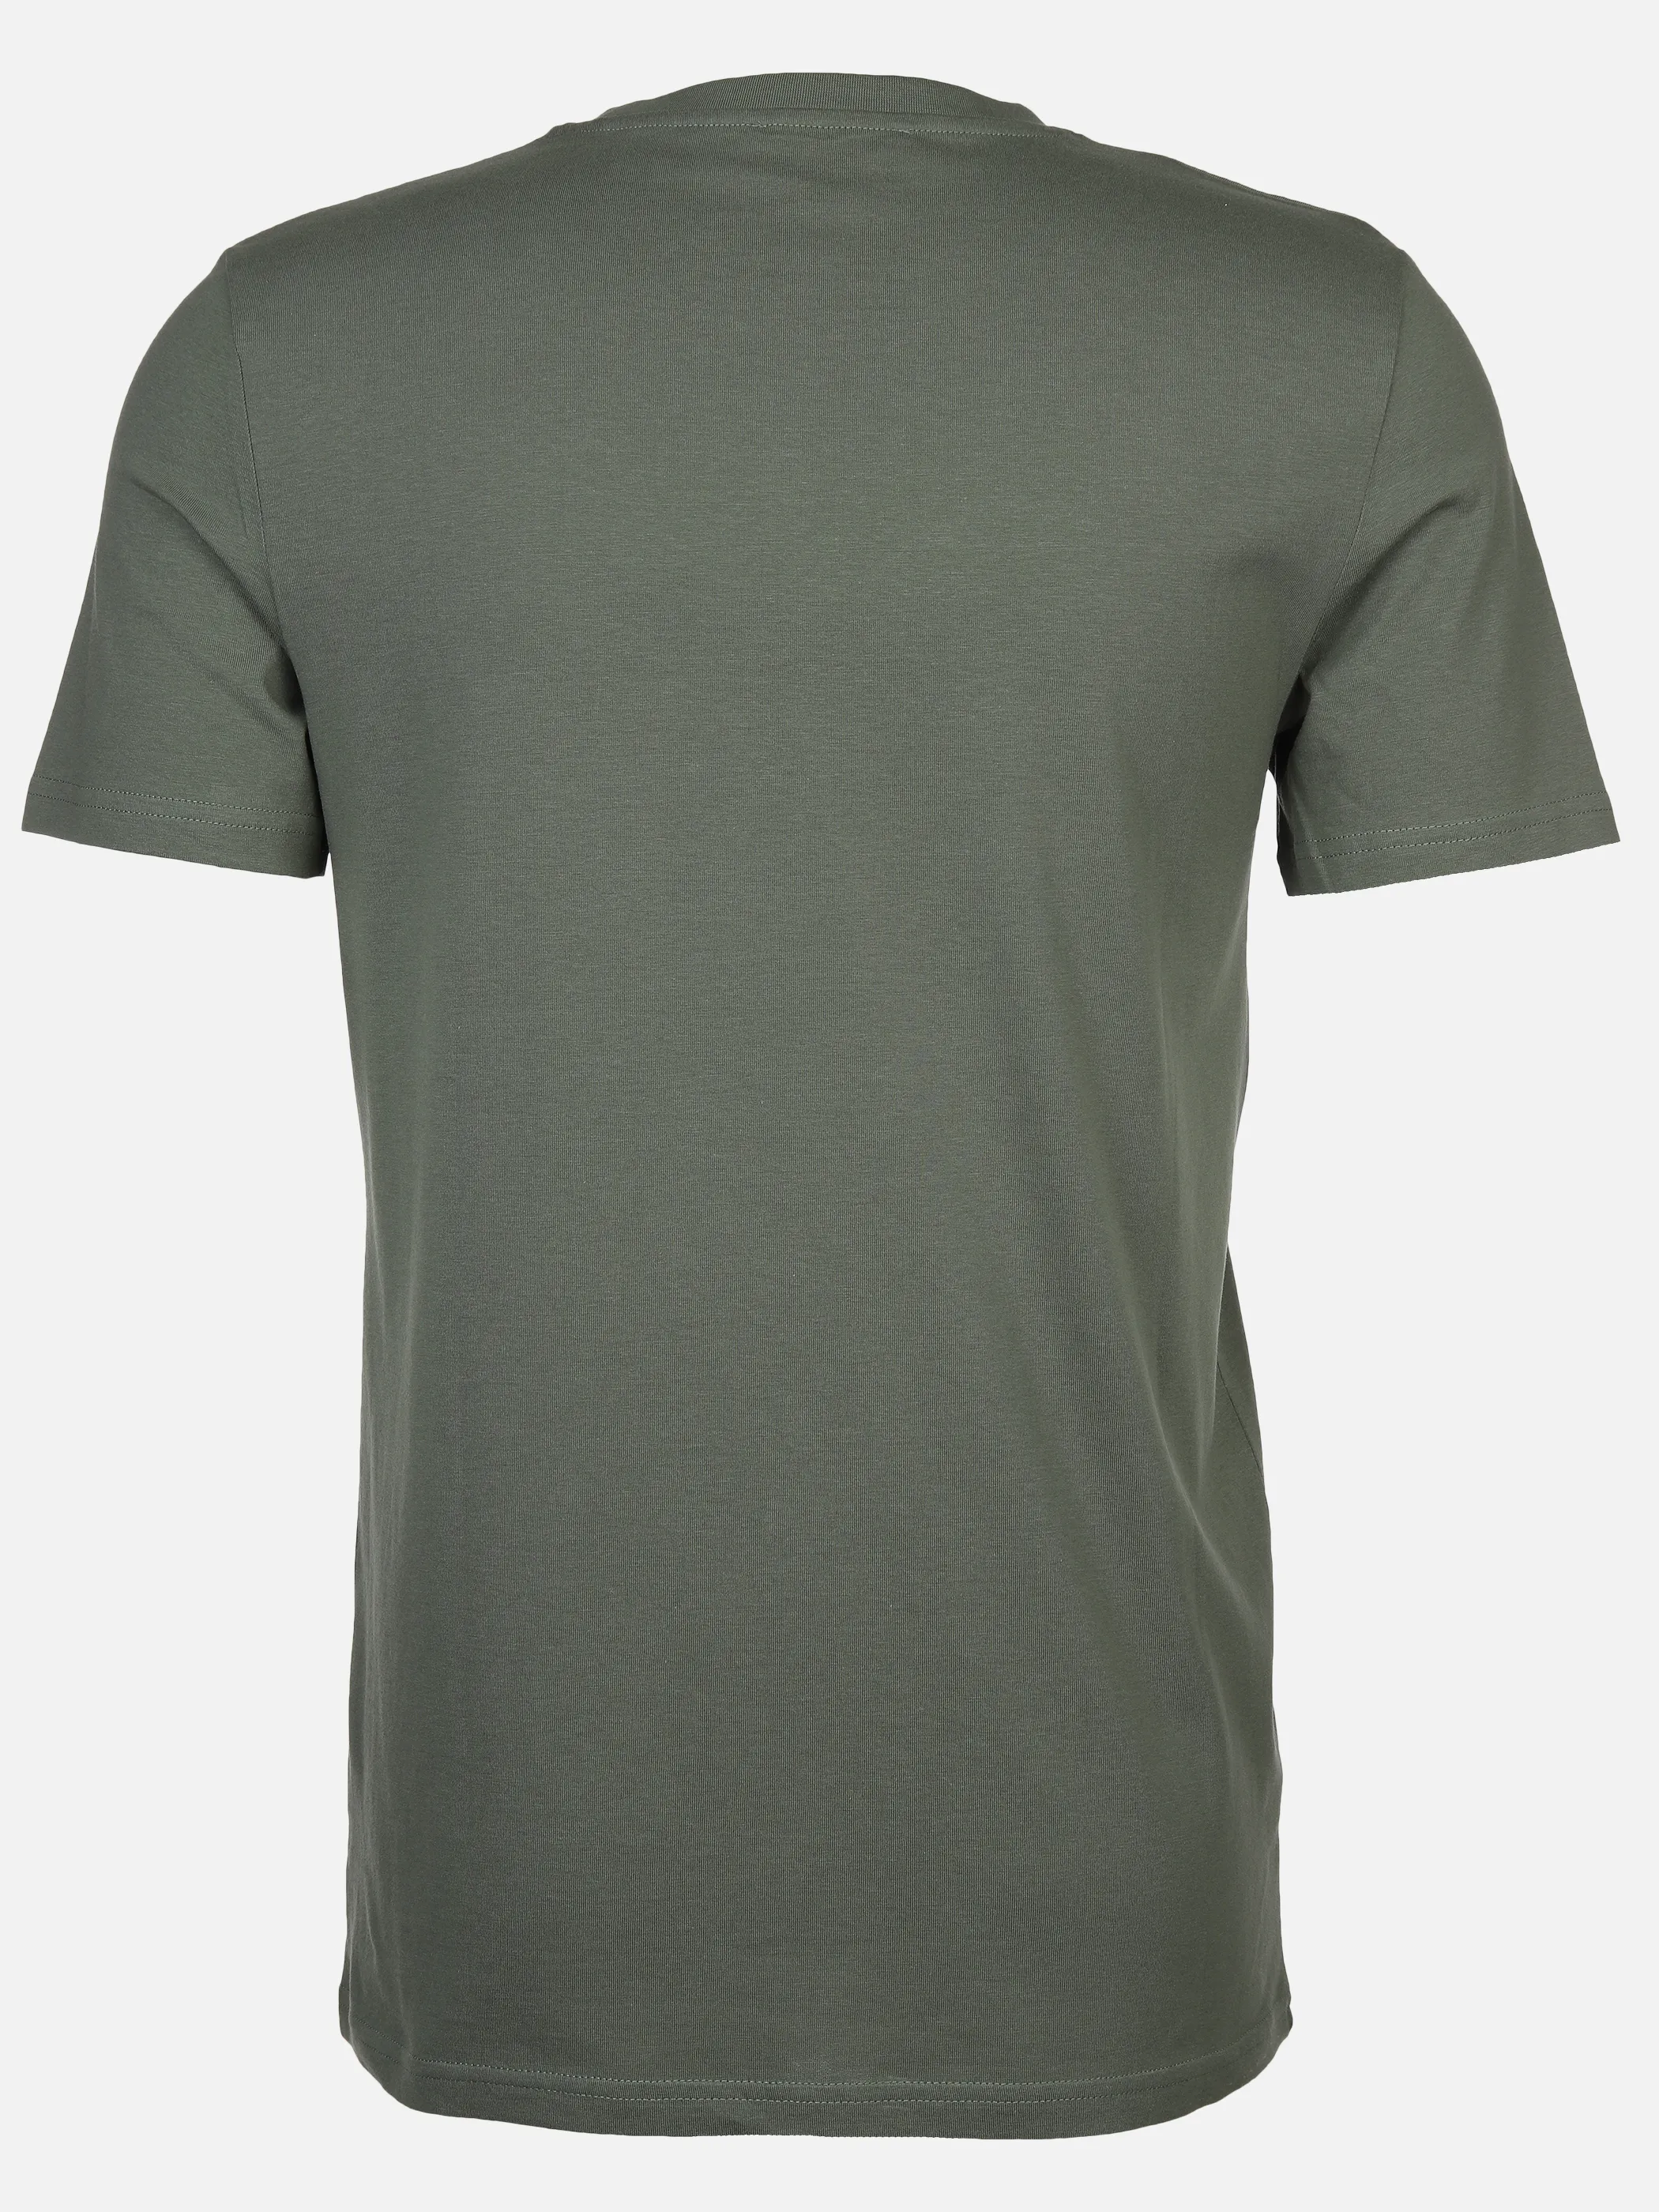 Harvey Miller He. T-Shirt 1/2 Arm Logo 882848 KHAKI 2